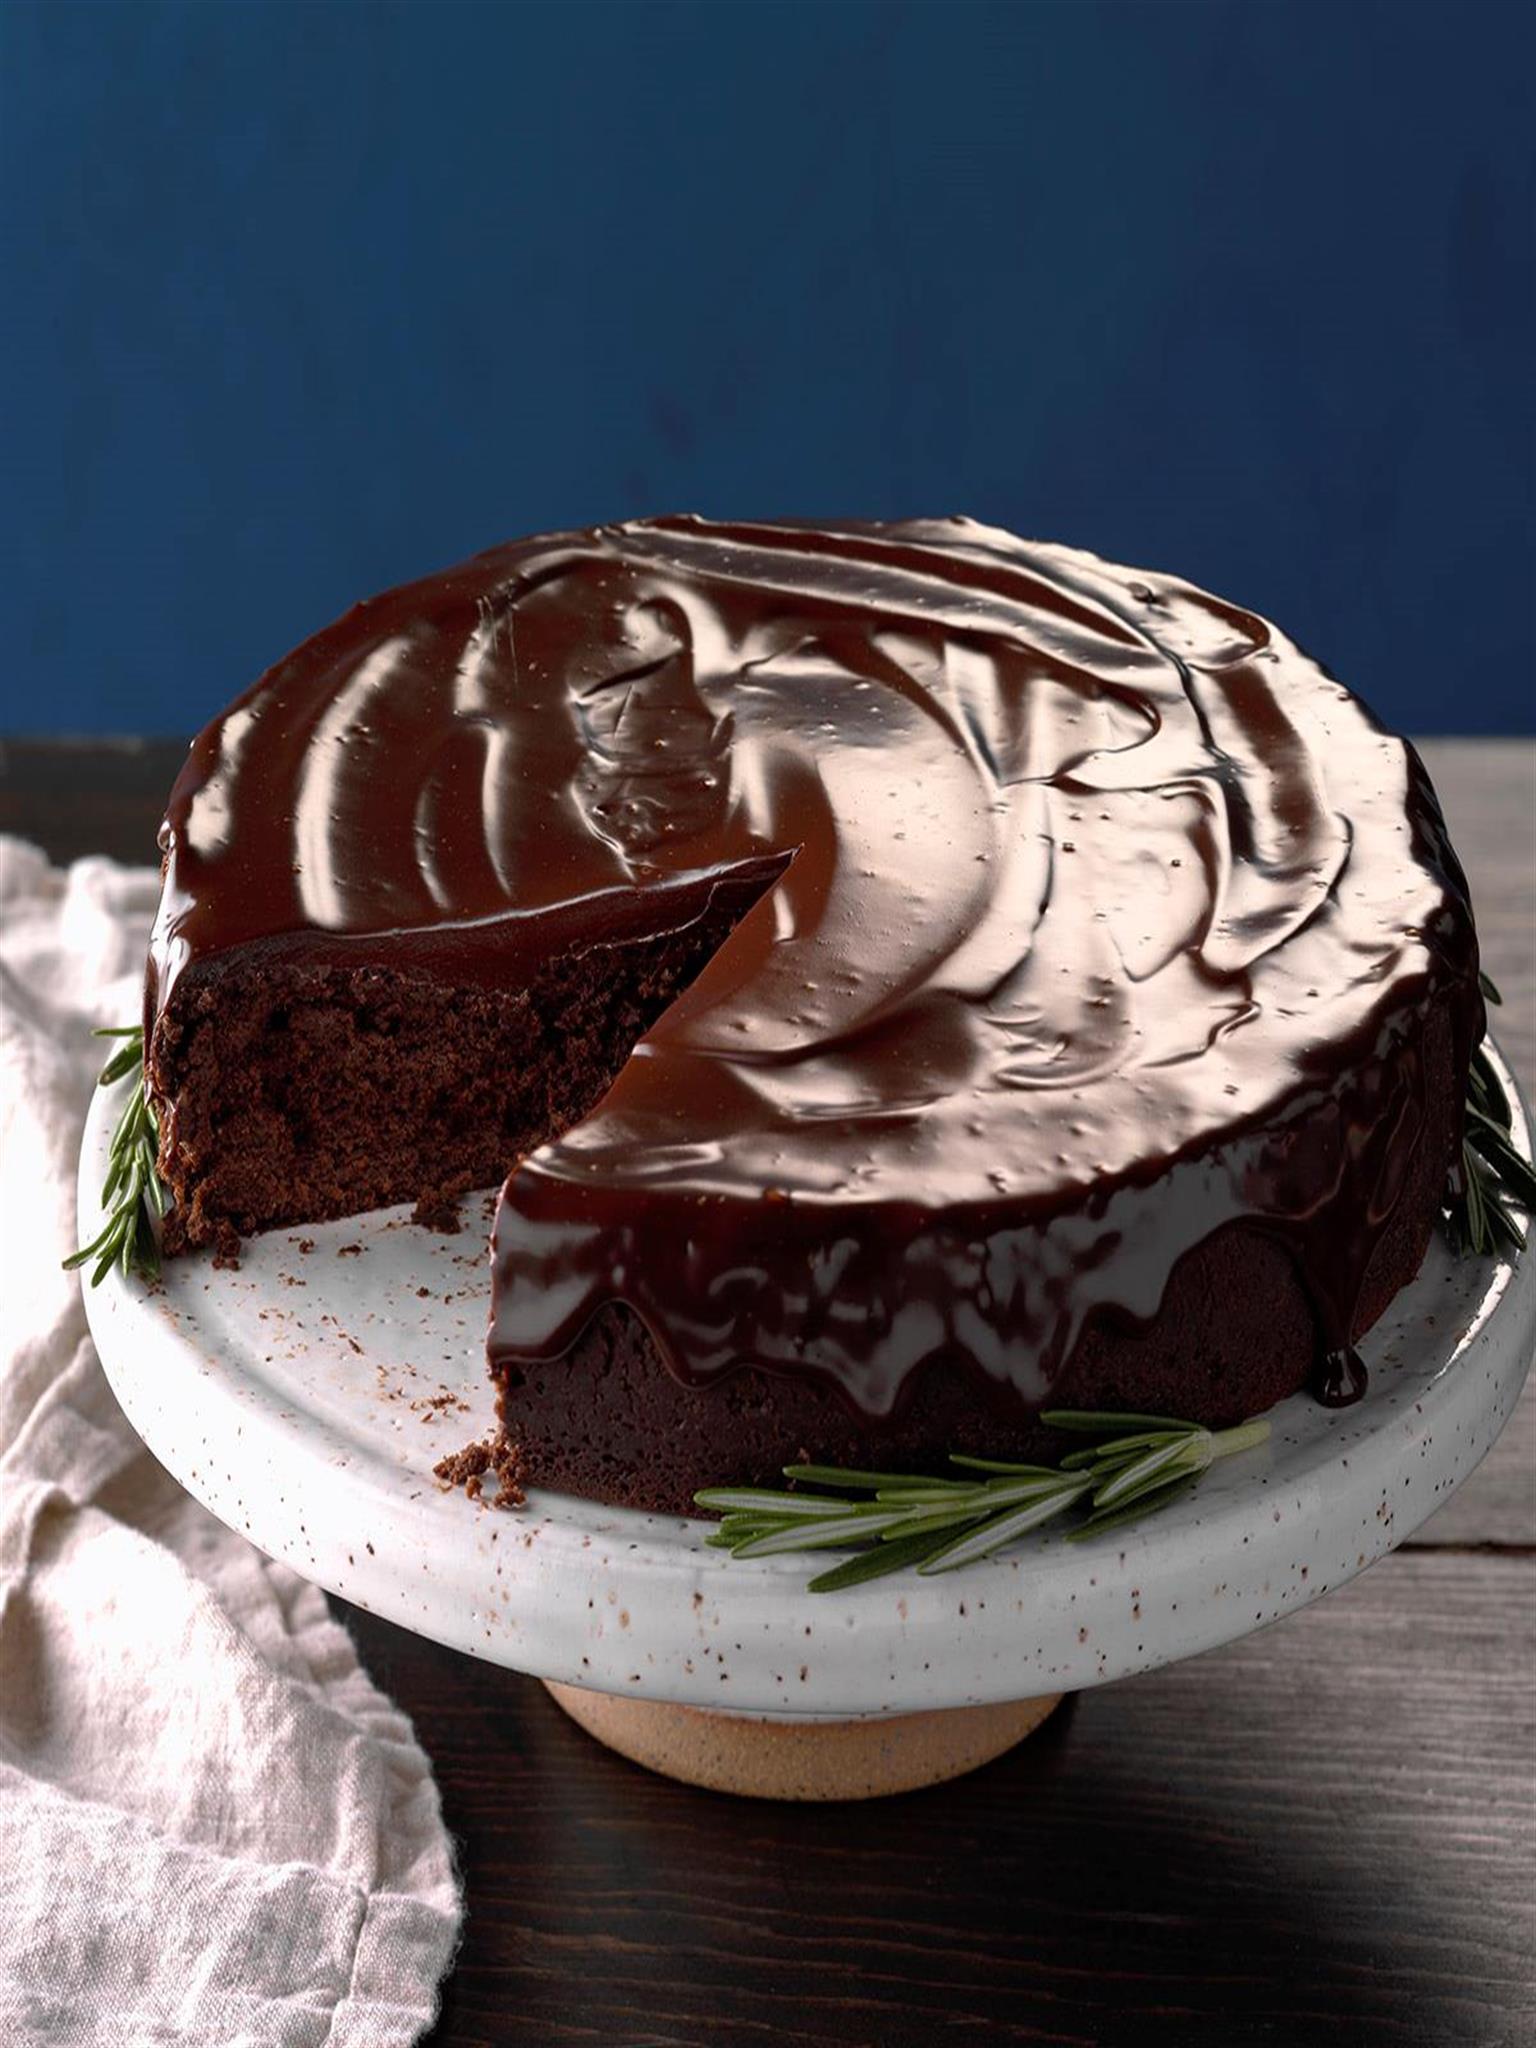 Best Flourless Chocolate Cake - Del's cooking twist